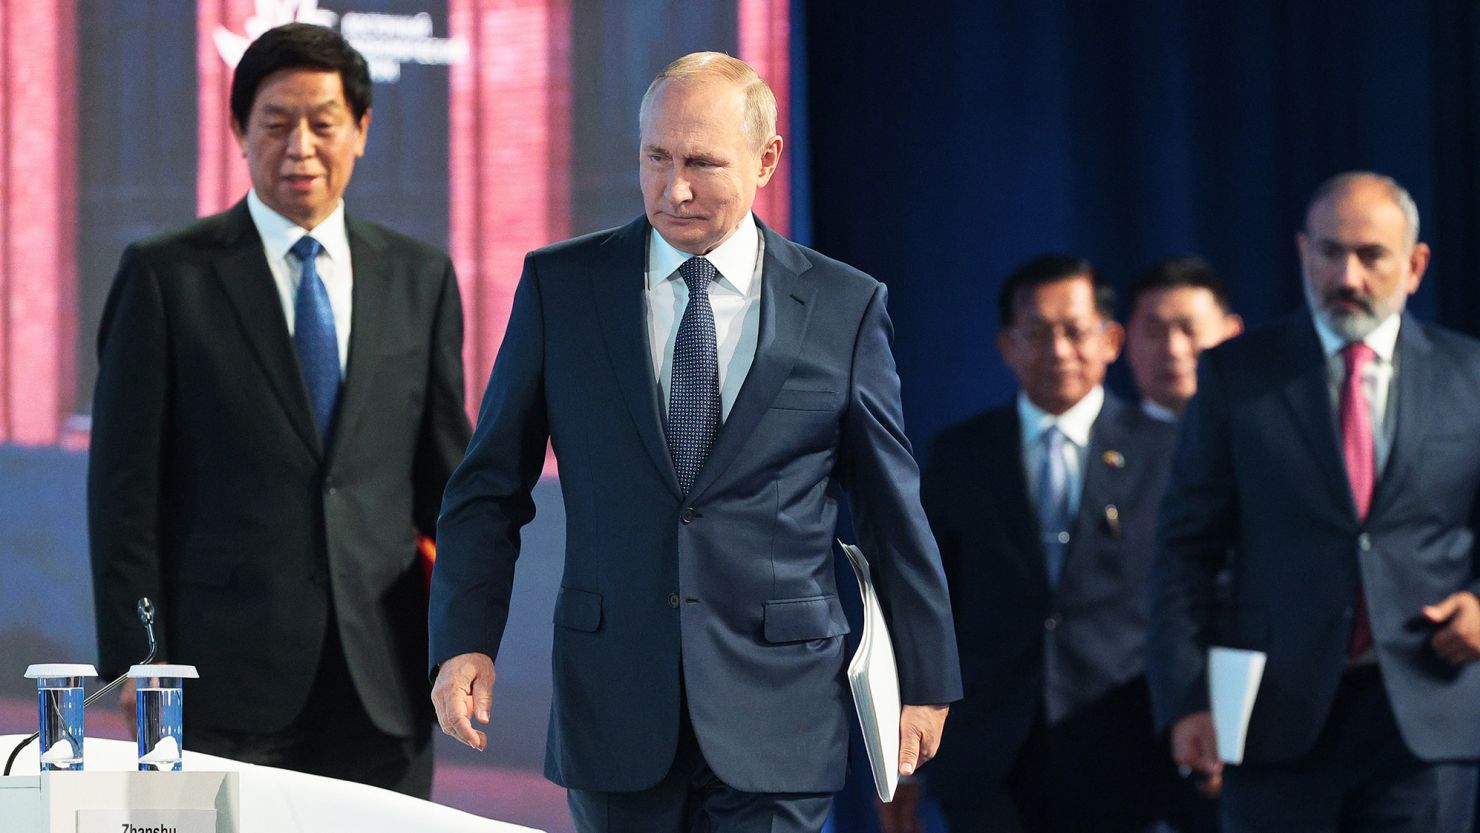 Russian President Vladimir Putin, center, Chairman of National People's Congress Li Zhanshu, left, attend a plenary session at the Eastern Economic Forum in Vladivostok, Russia.